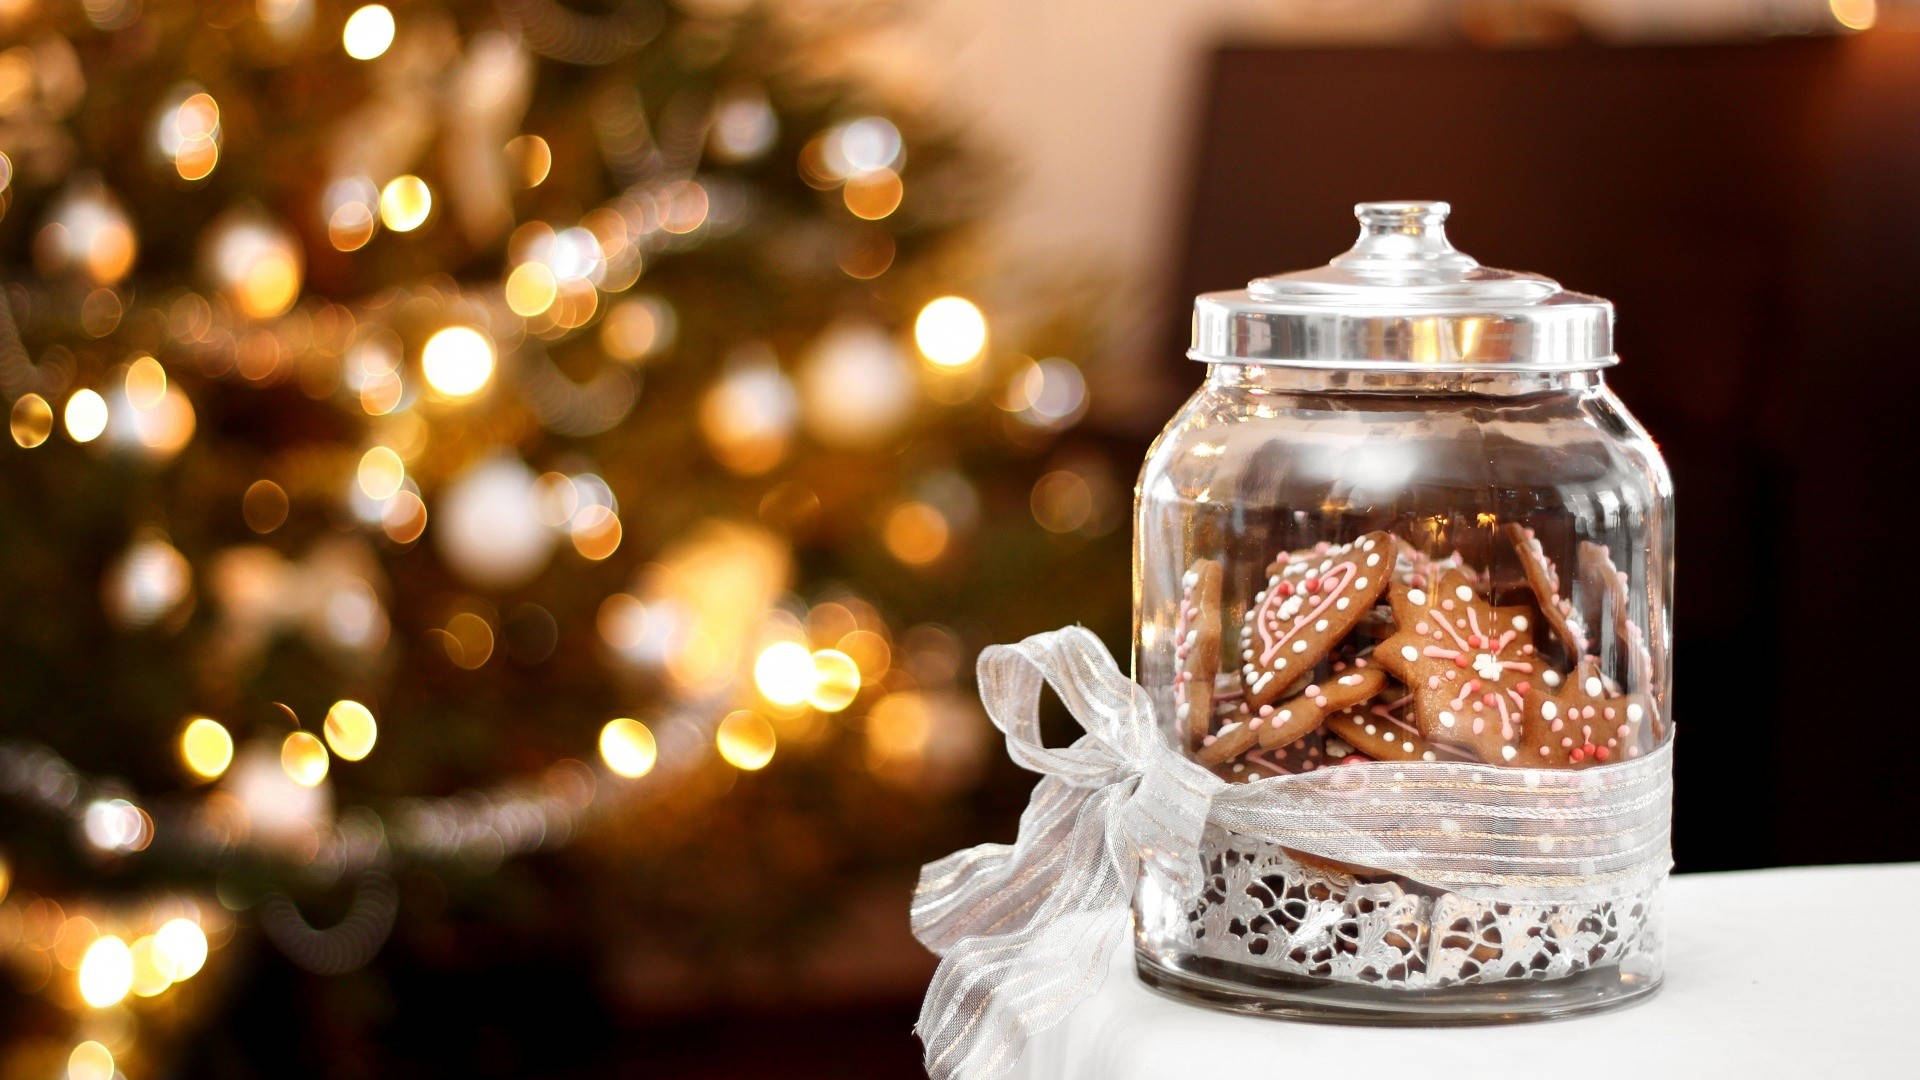 Aesthetic Christmas Cookie Jar Background